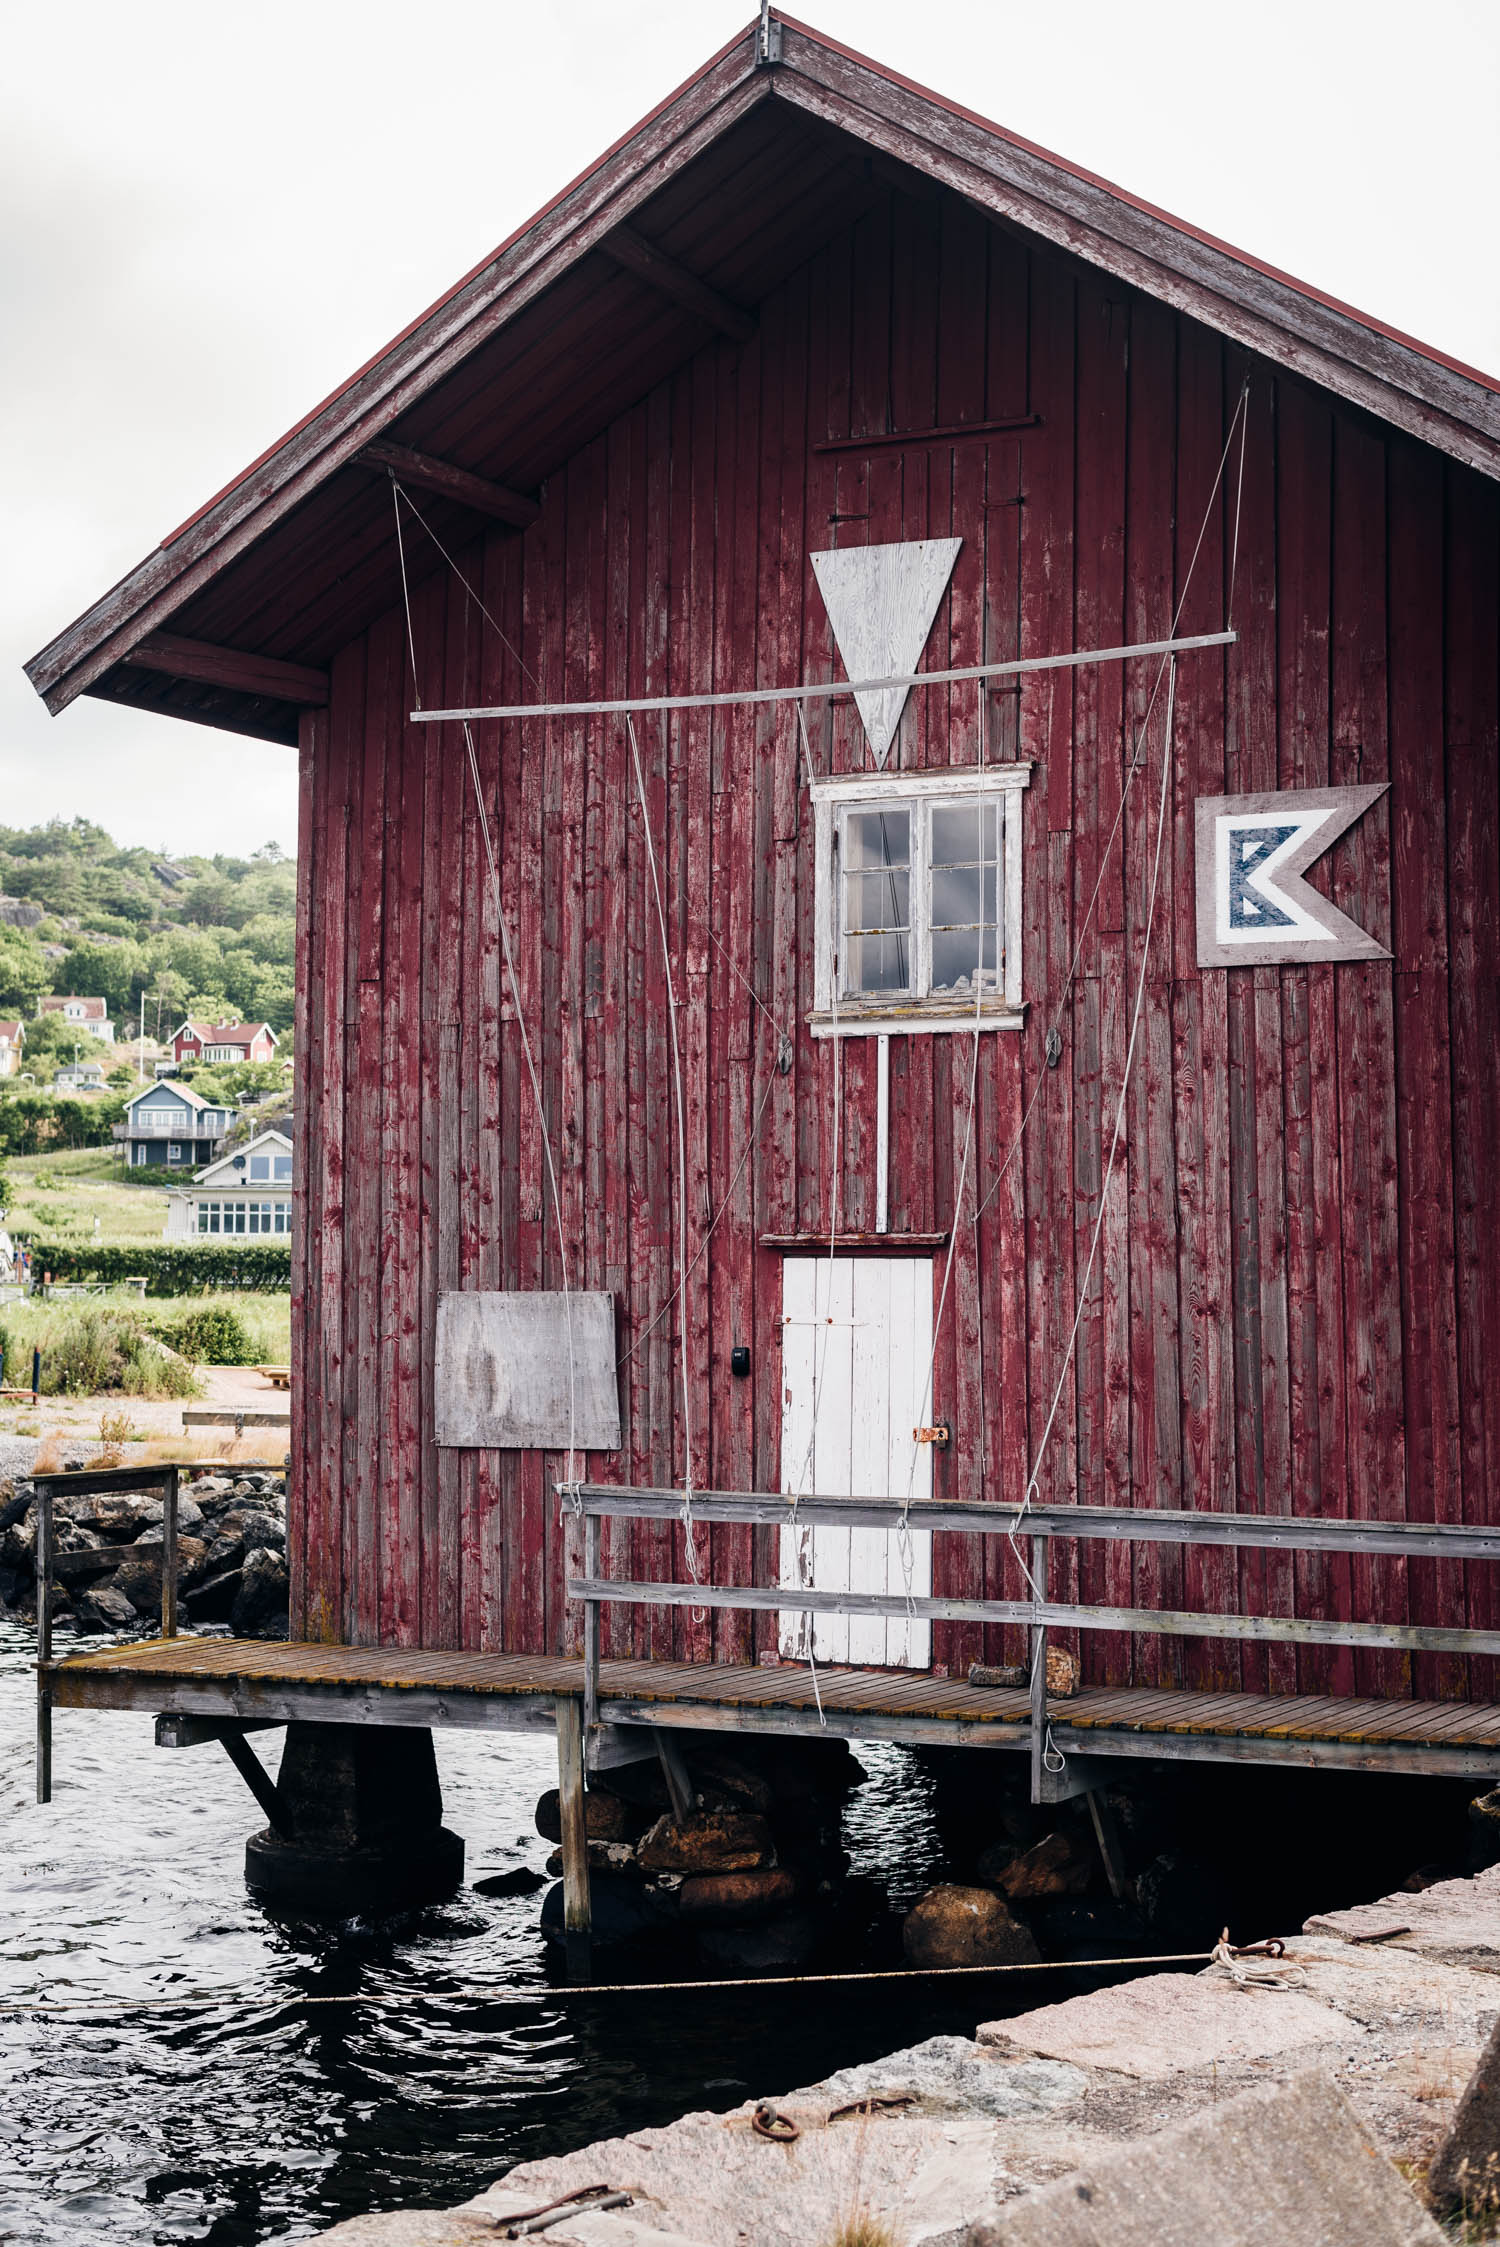 CYCLING-SCANDINAVIA-NORWAY-BIKEPACKING-GUSTAV-THUESEN-PHOTOGRAPHER-PHOTOGRAPHY-ADVENTURE-7.jpg